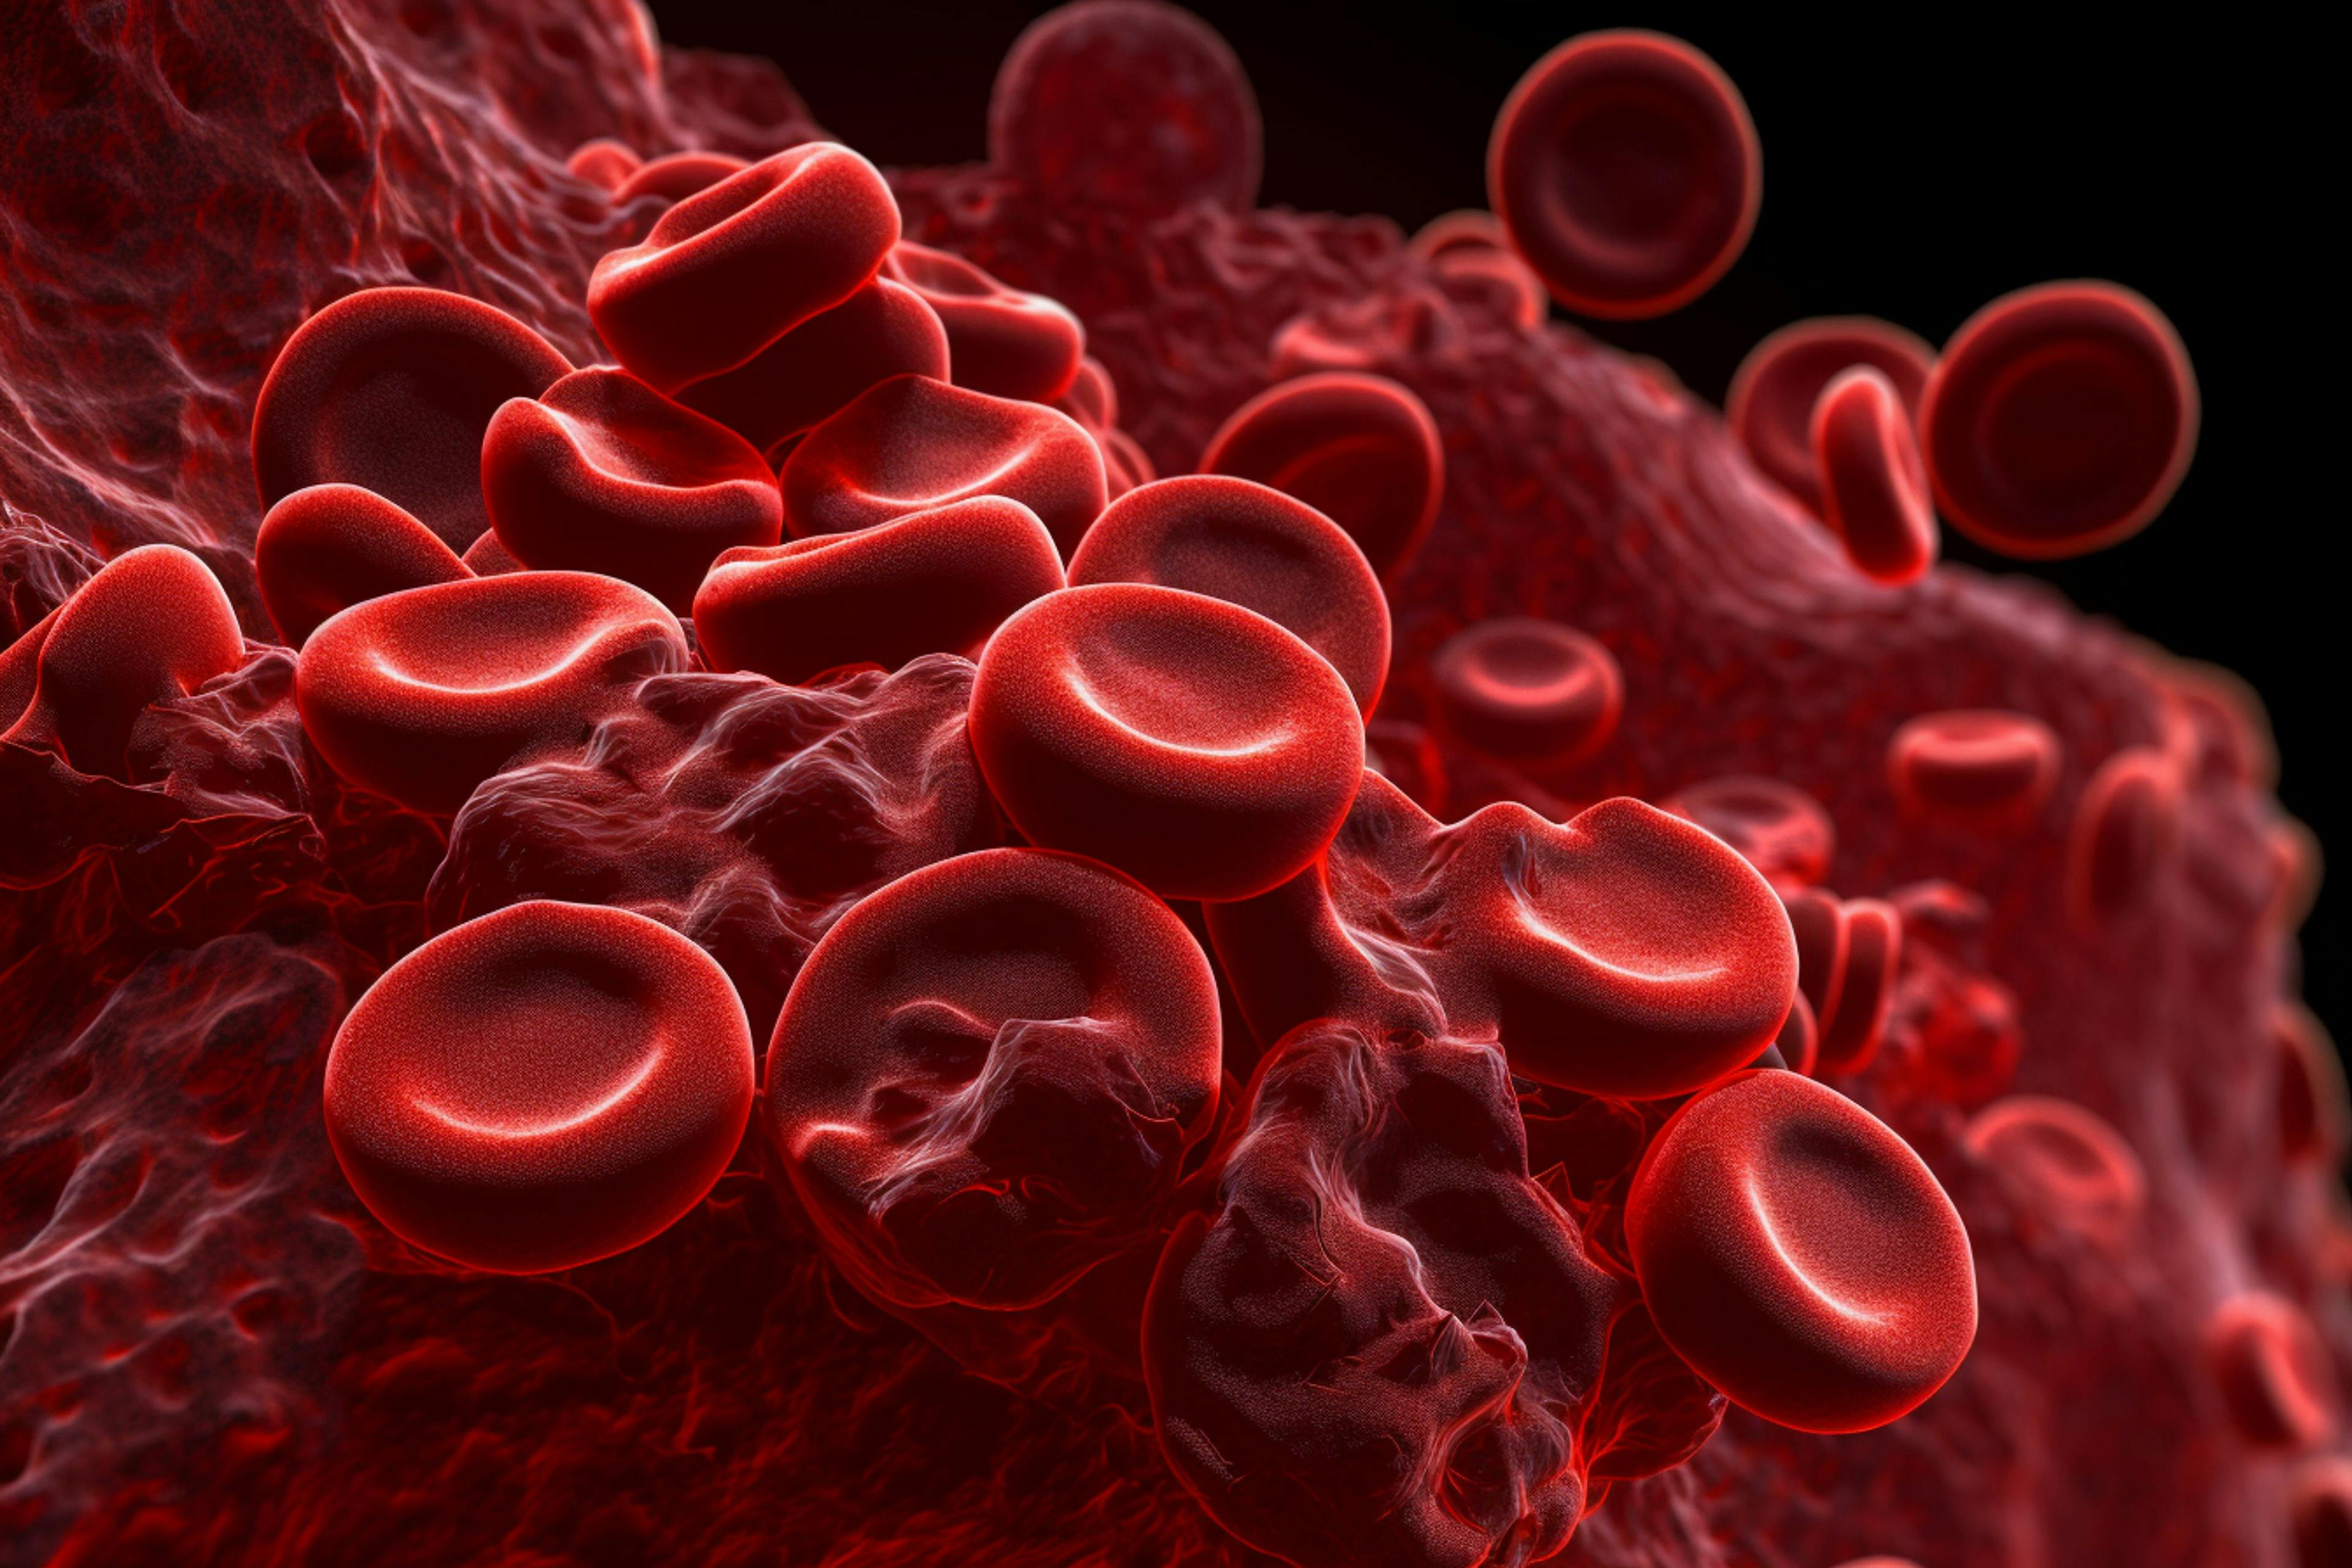 Platelets forming a blood clot, Hematology, Hemophilia A, AI Generative | Image Credit: Катерина Євтехова - stock.adobe.com